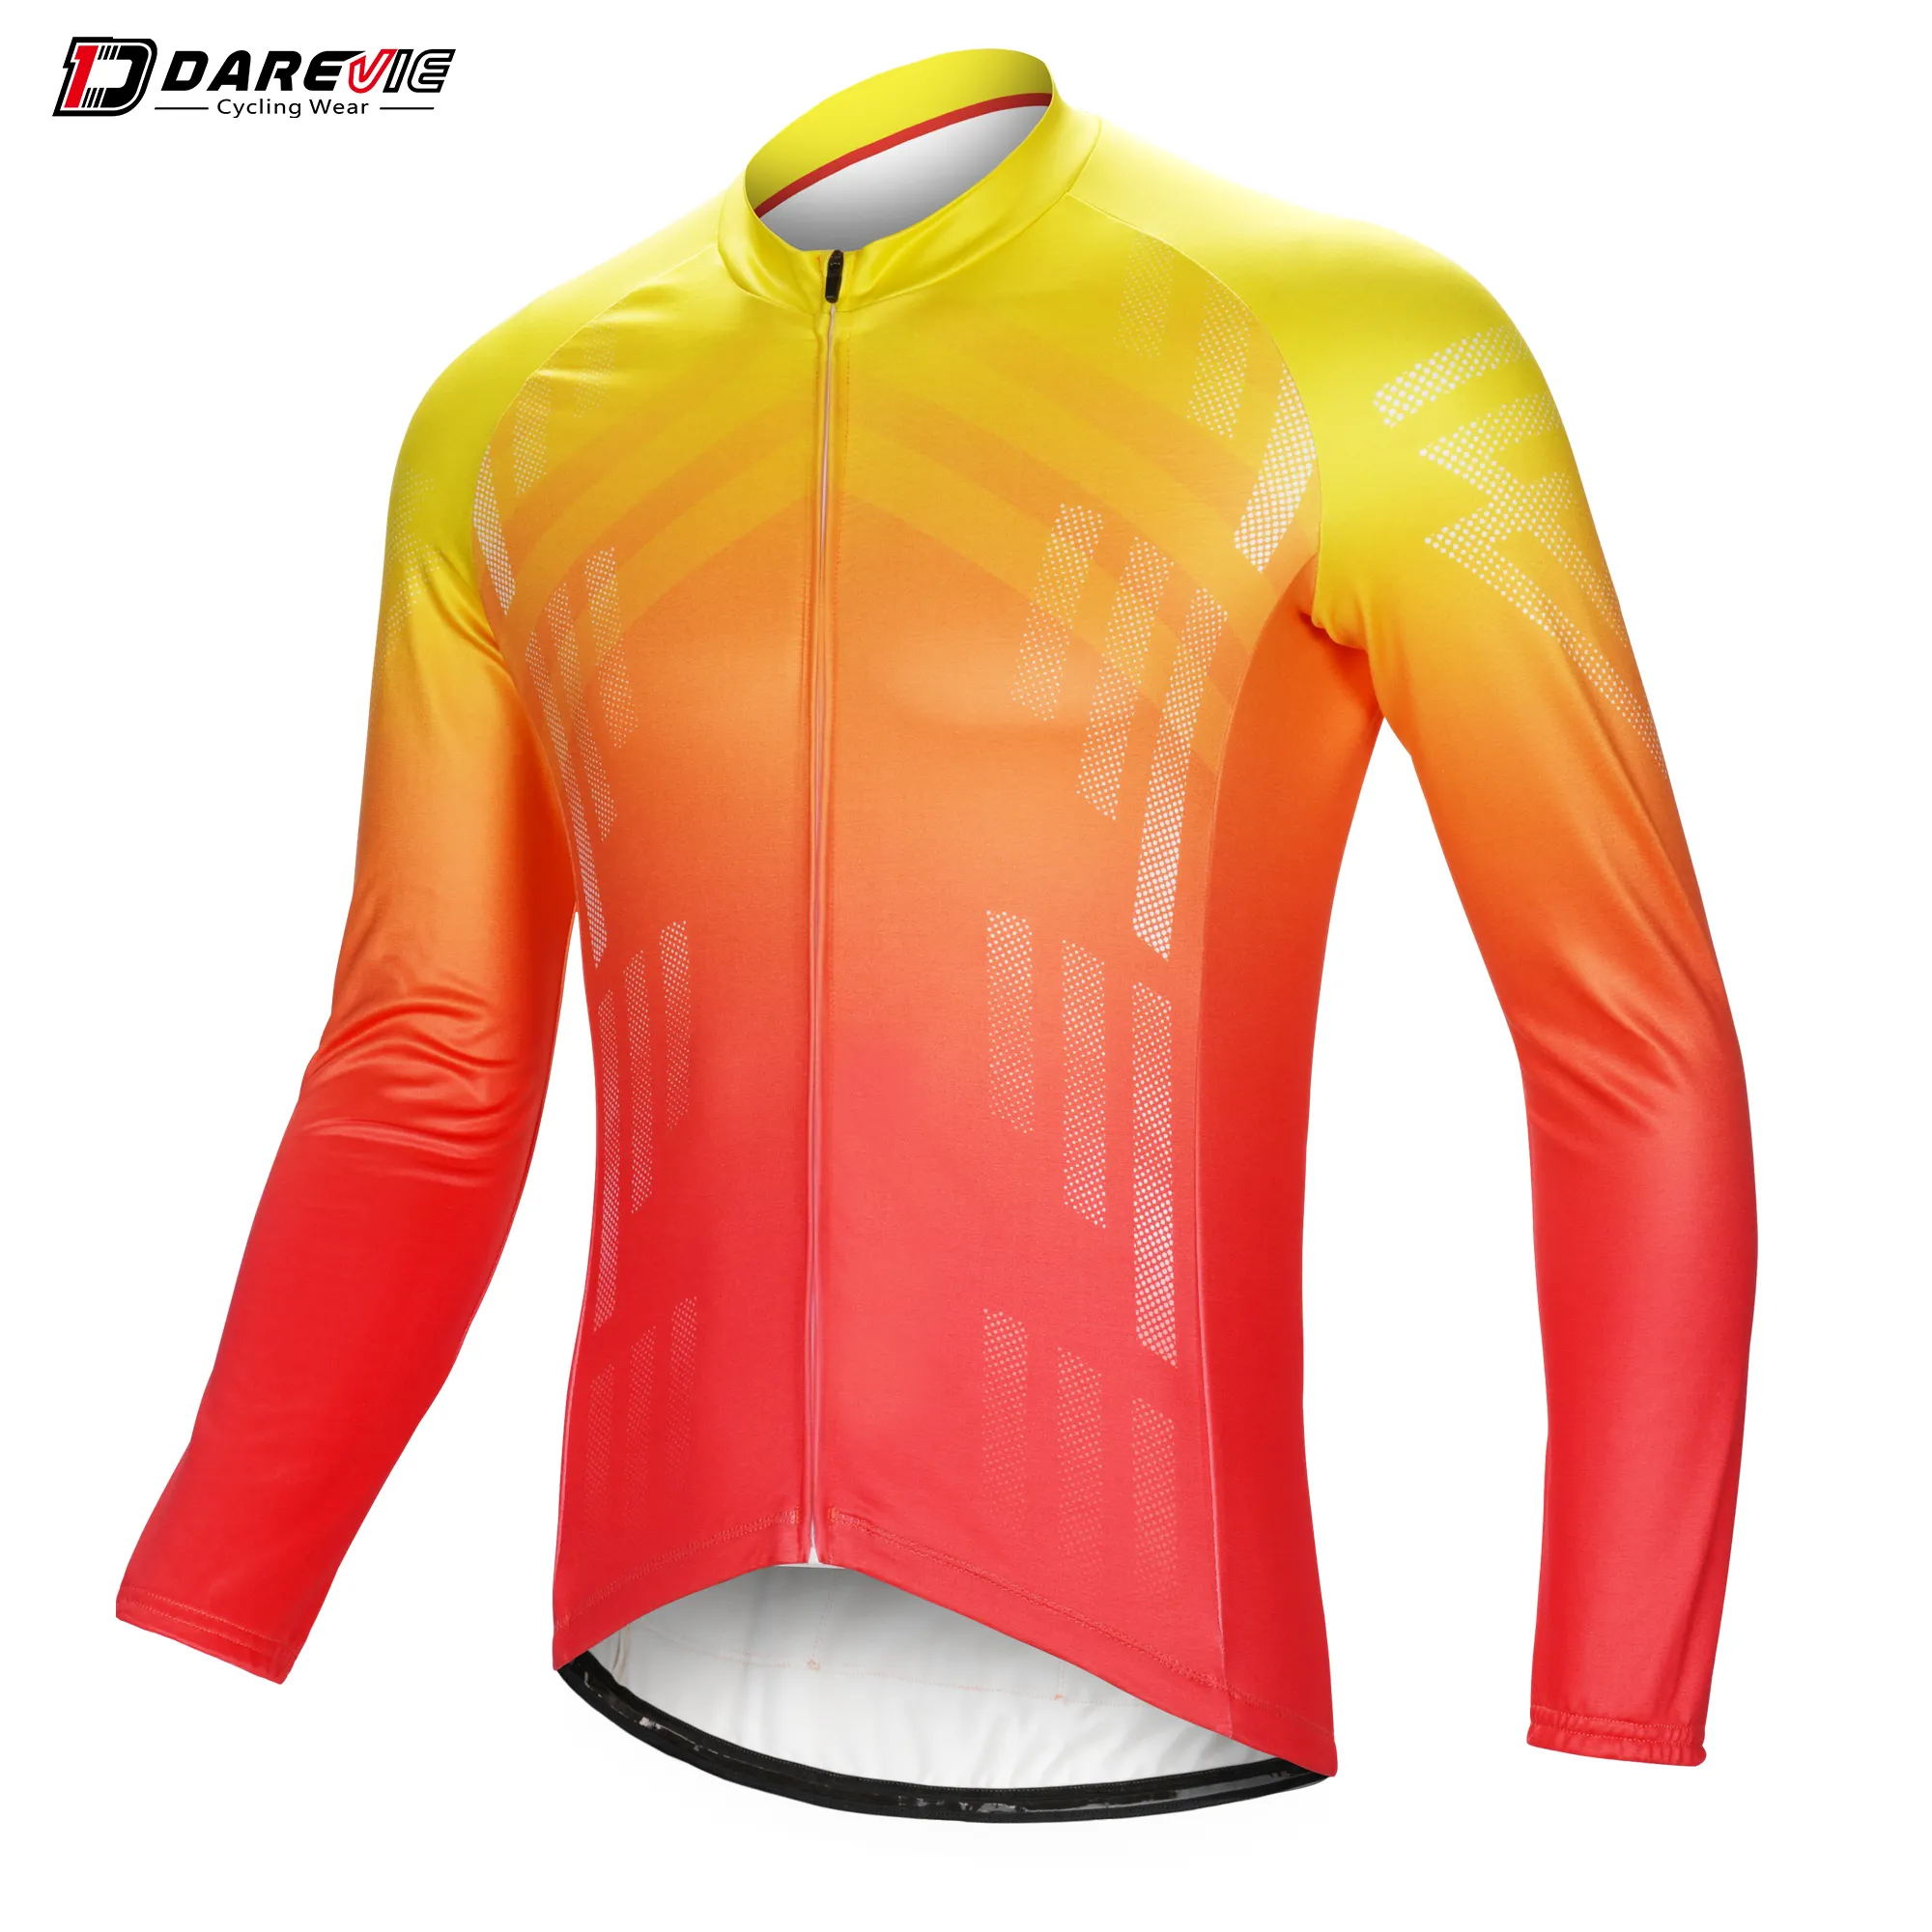 Darevie Wholesales Men's Long Sleeve Cycling Jacket Wear Outdoor Sports Windbreaker Coat Biking Thermal Shirt